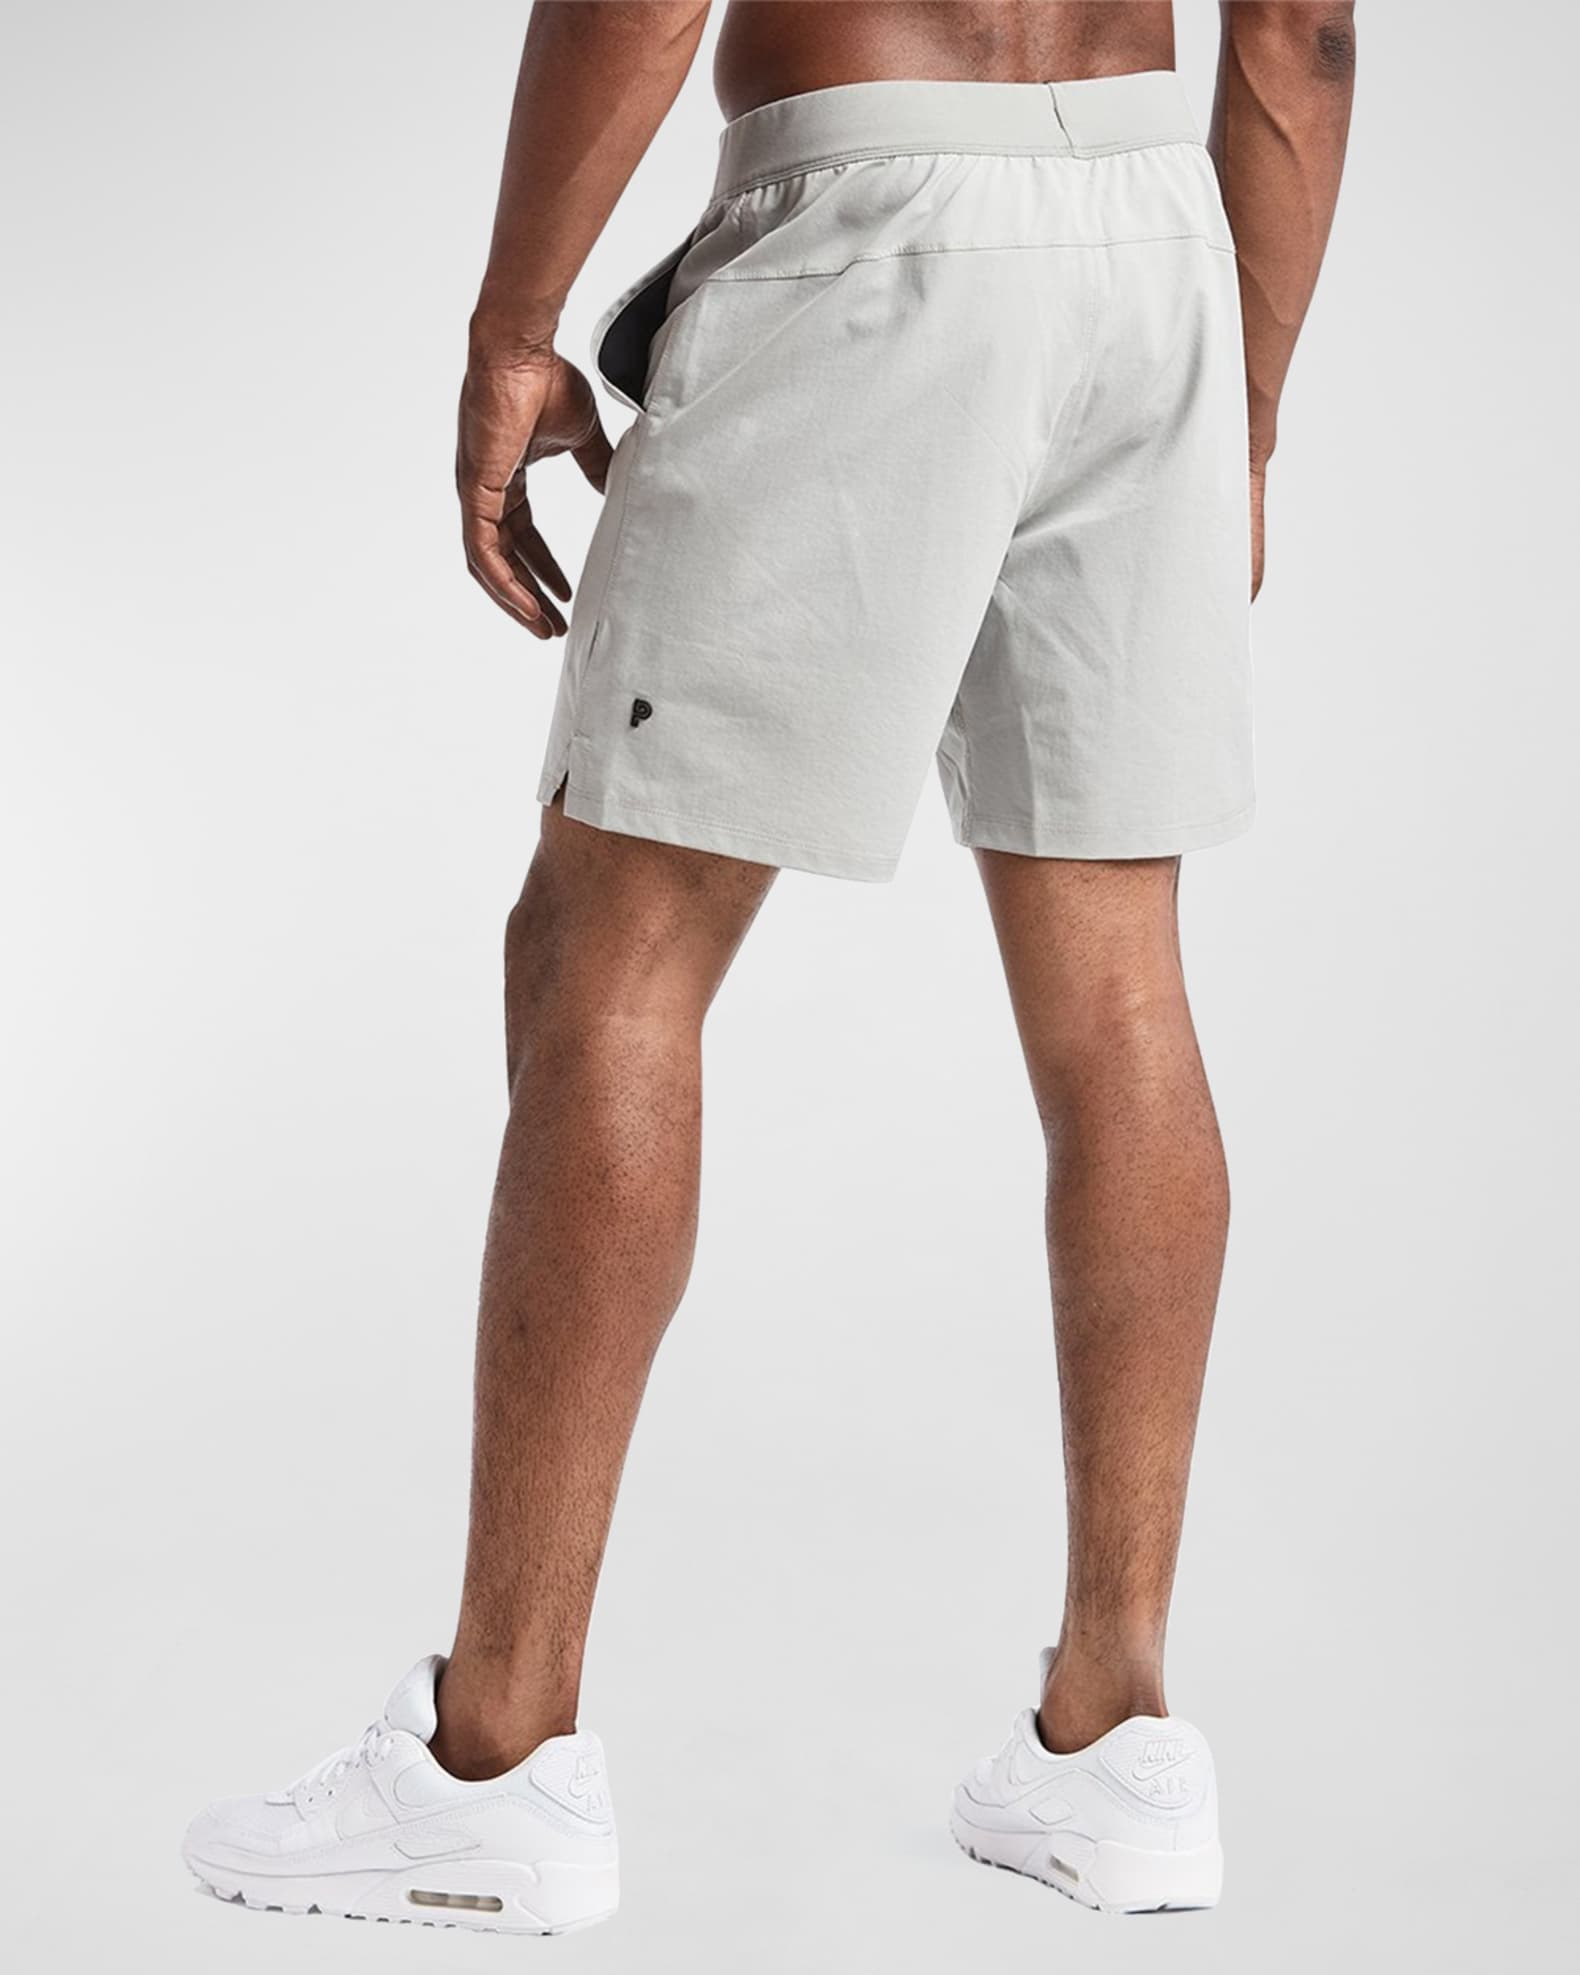 Public Rec Men's Solid Flex Athletic Shorts | Neiman Marcus